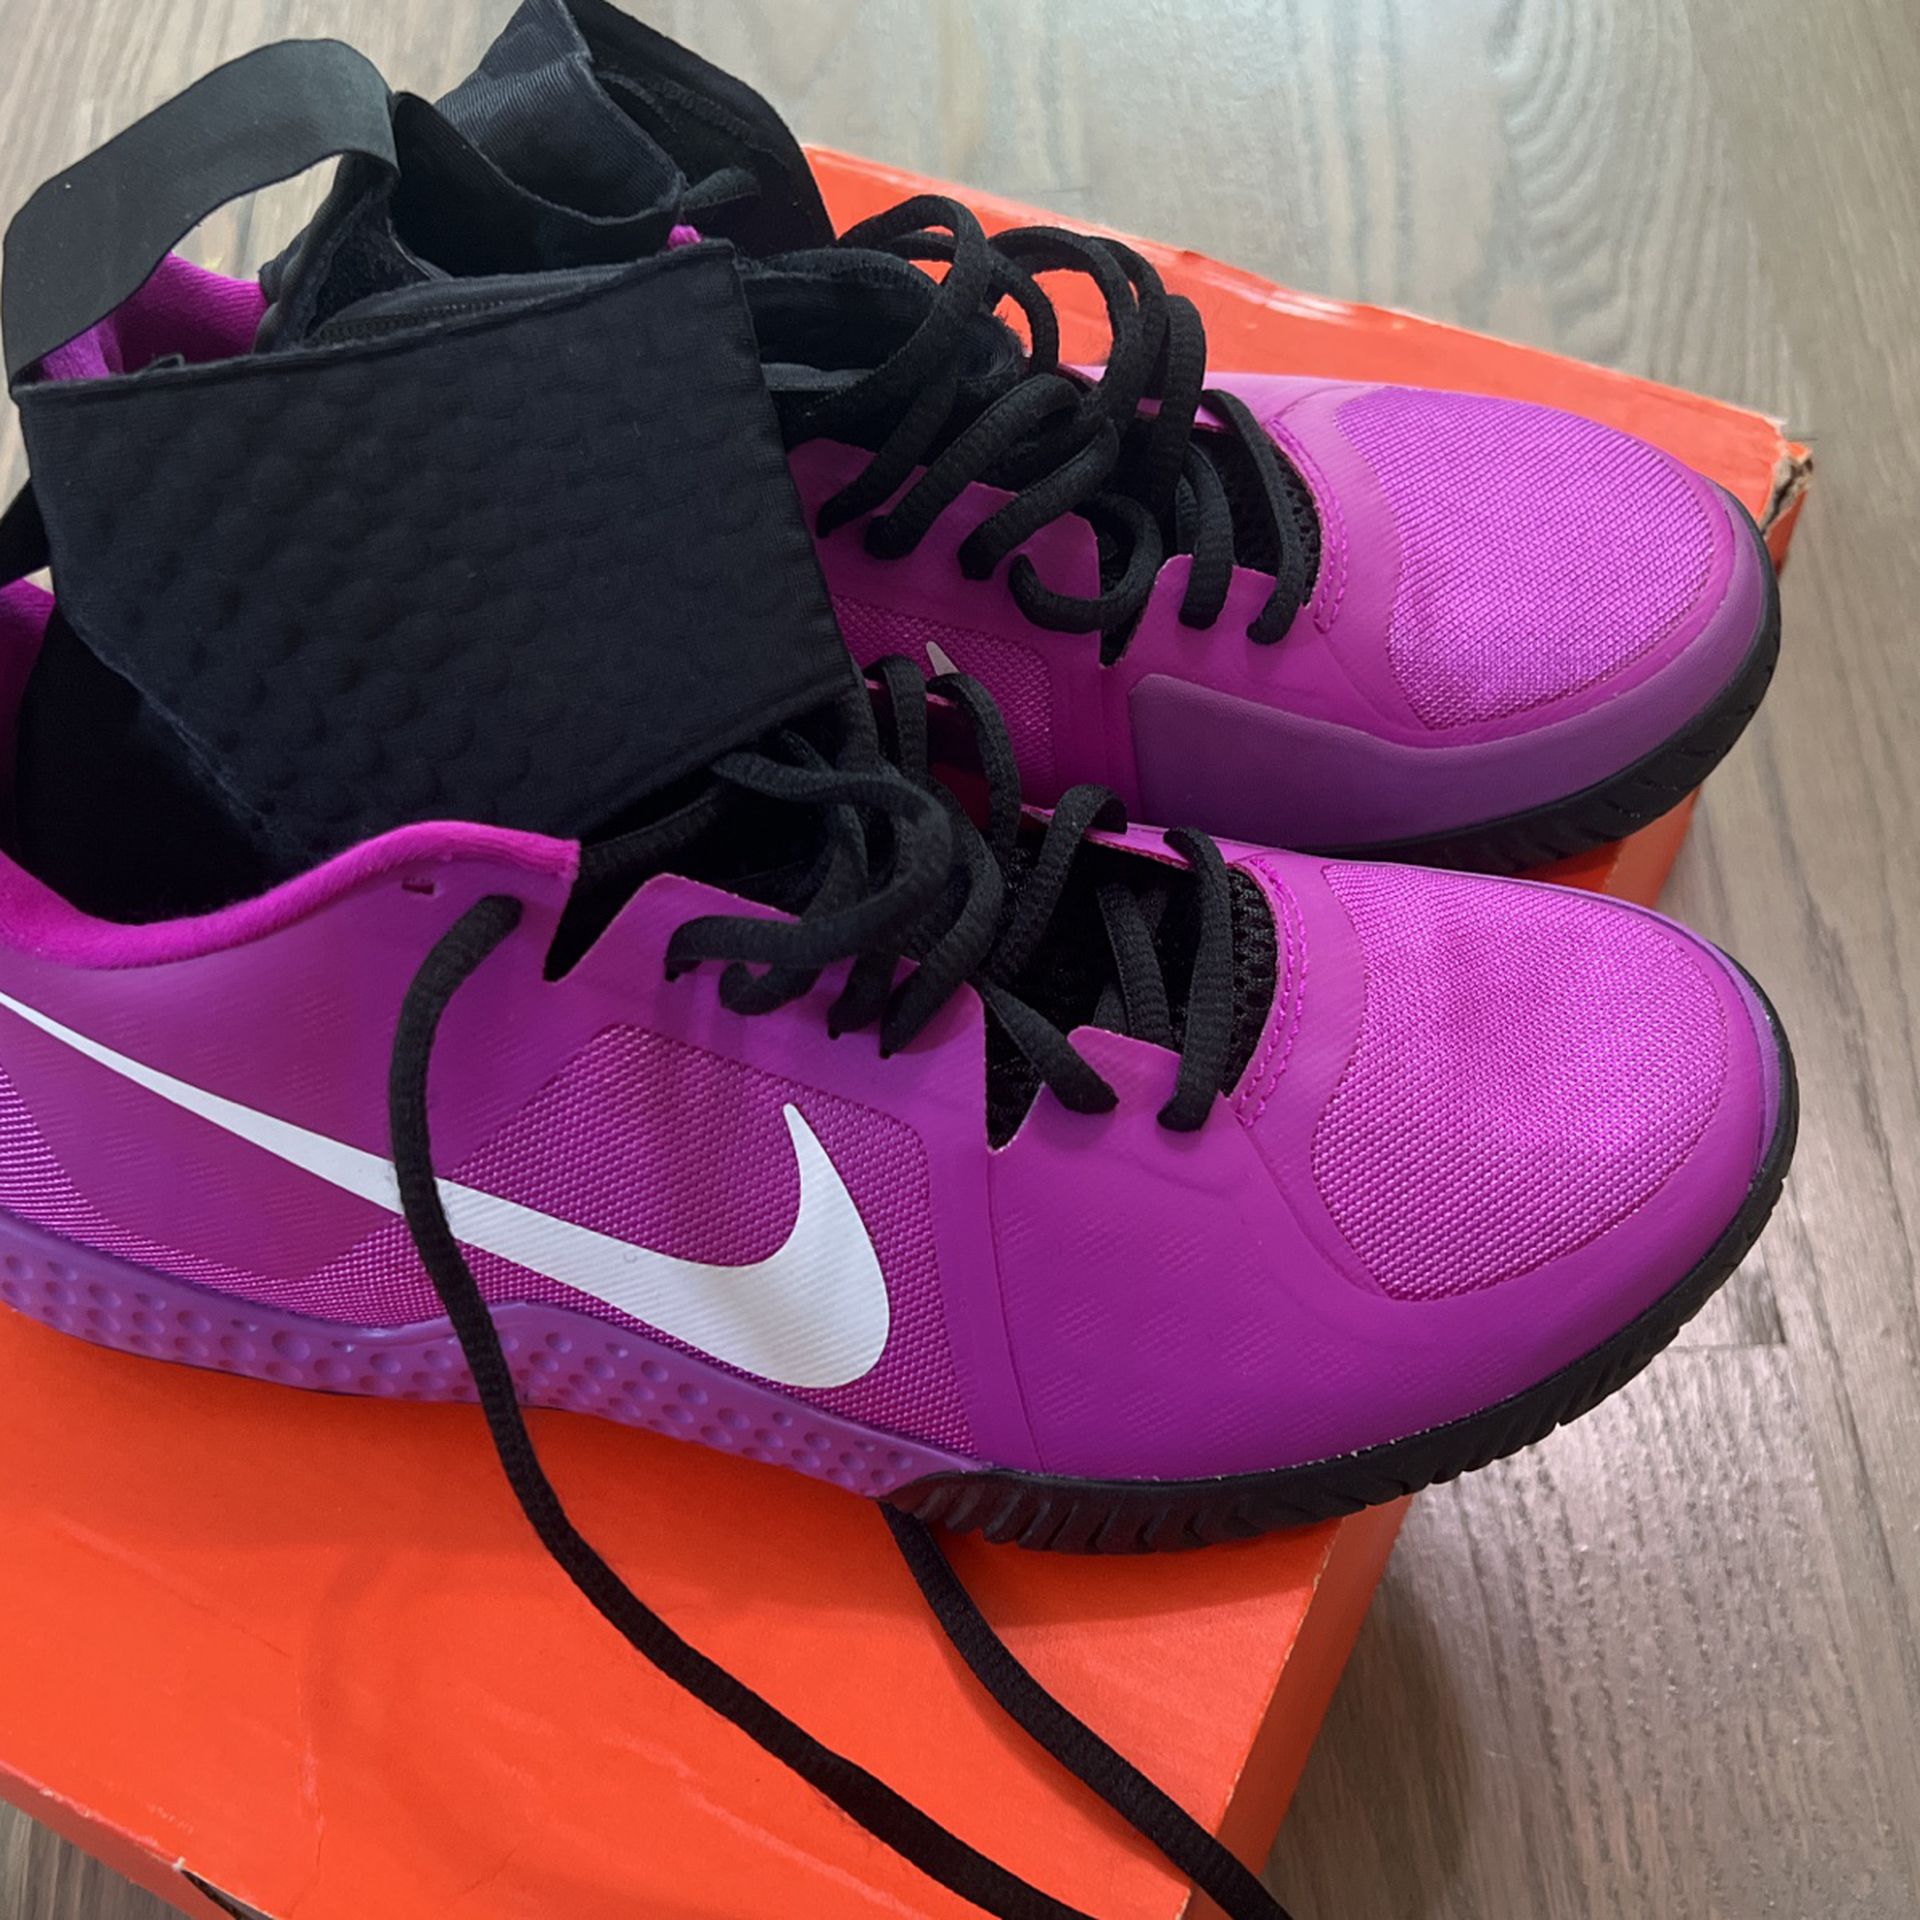 Nike Flare Women Size -8 Purple Color - Negotiable Price